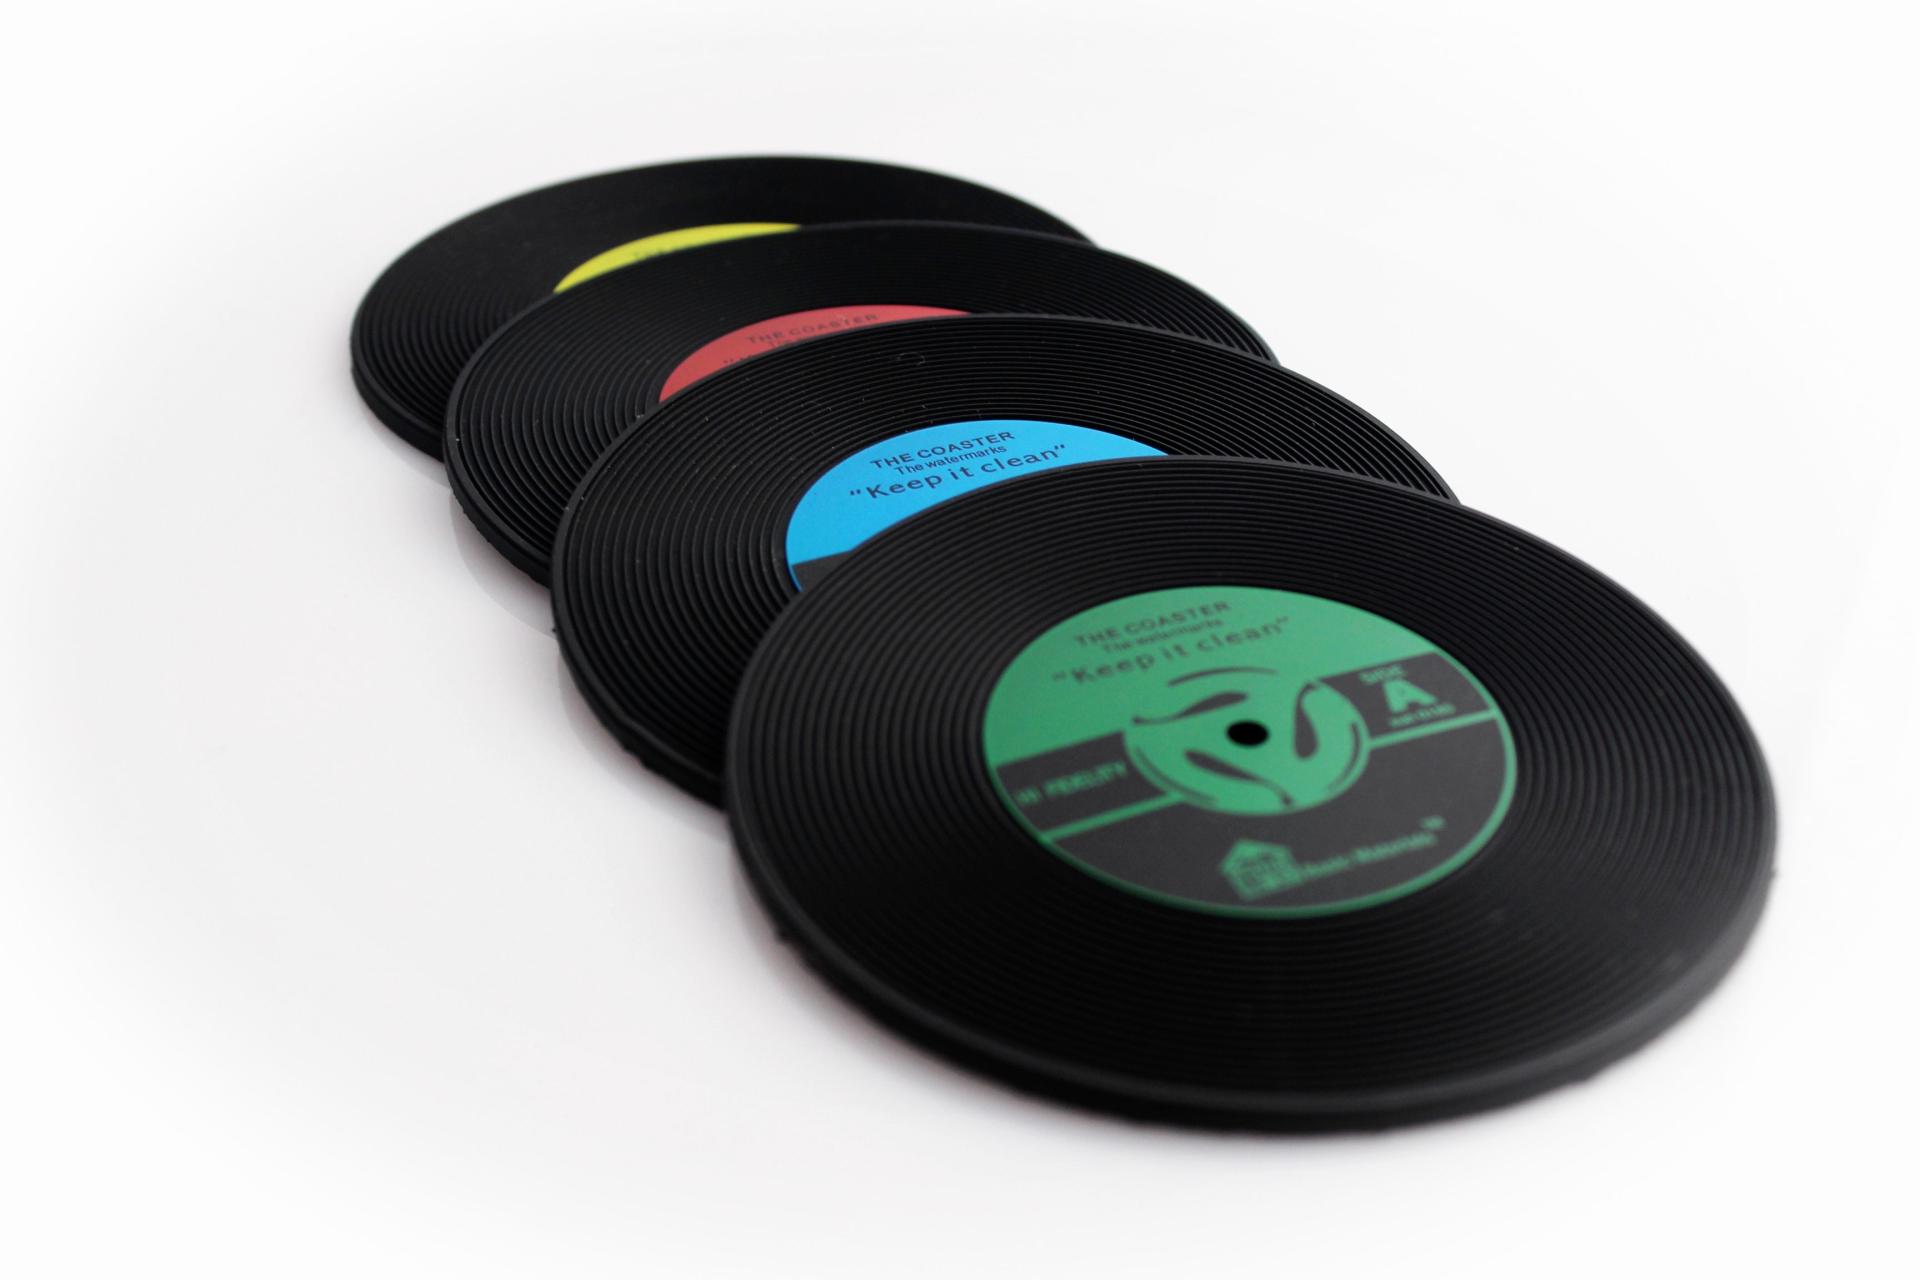 CD Record Drinks Coaster /Coffee Mat